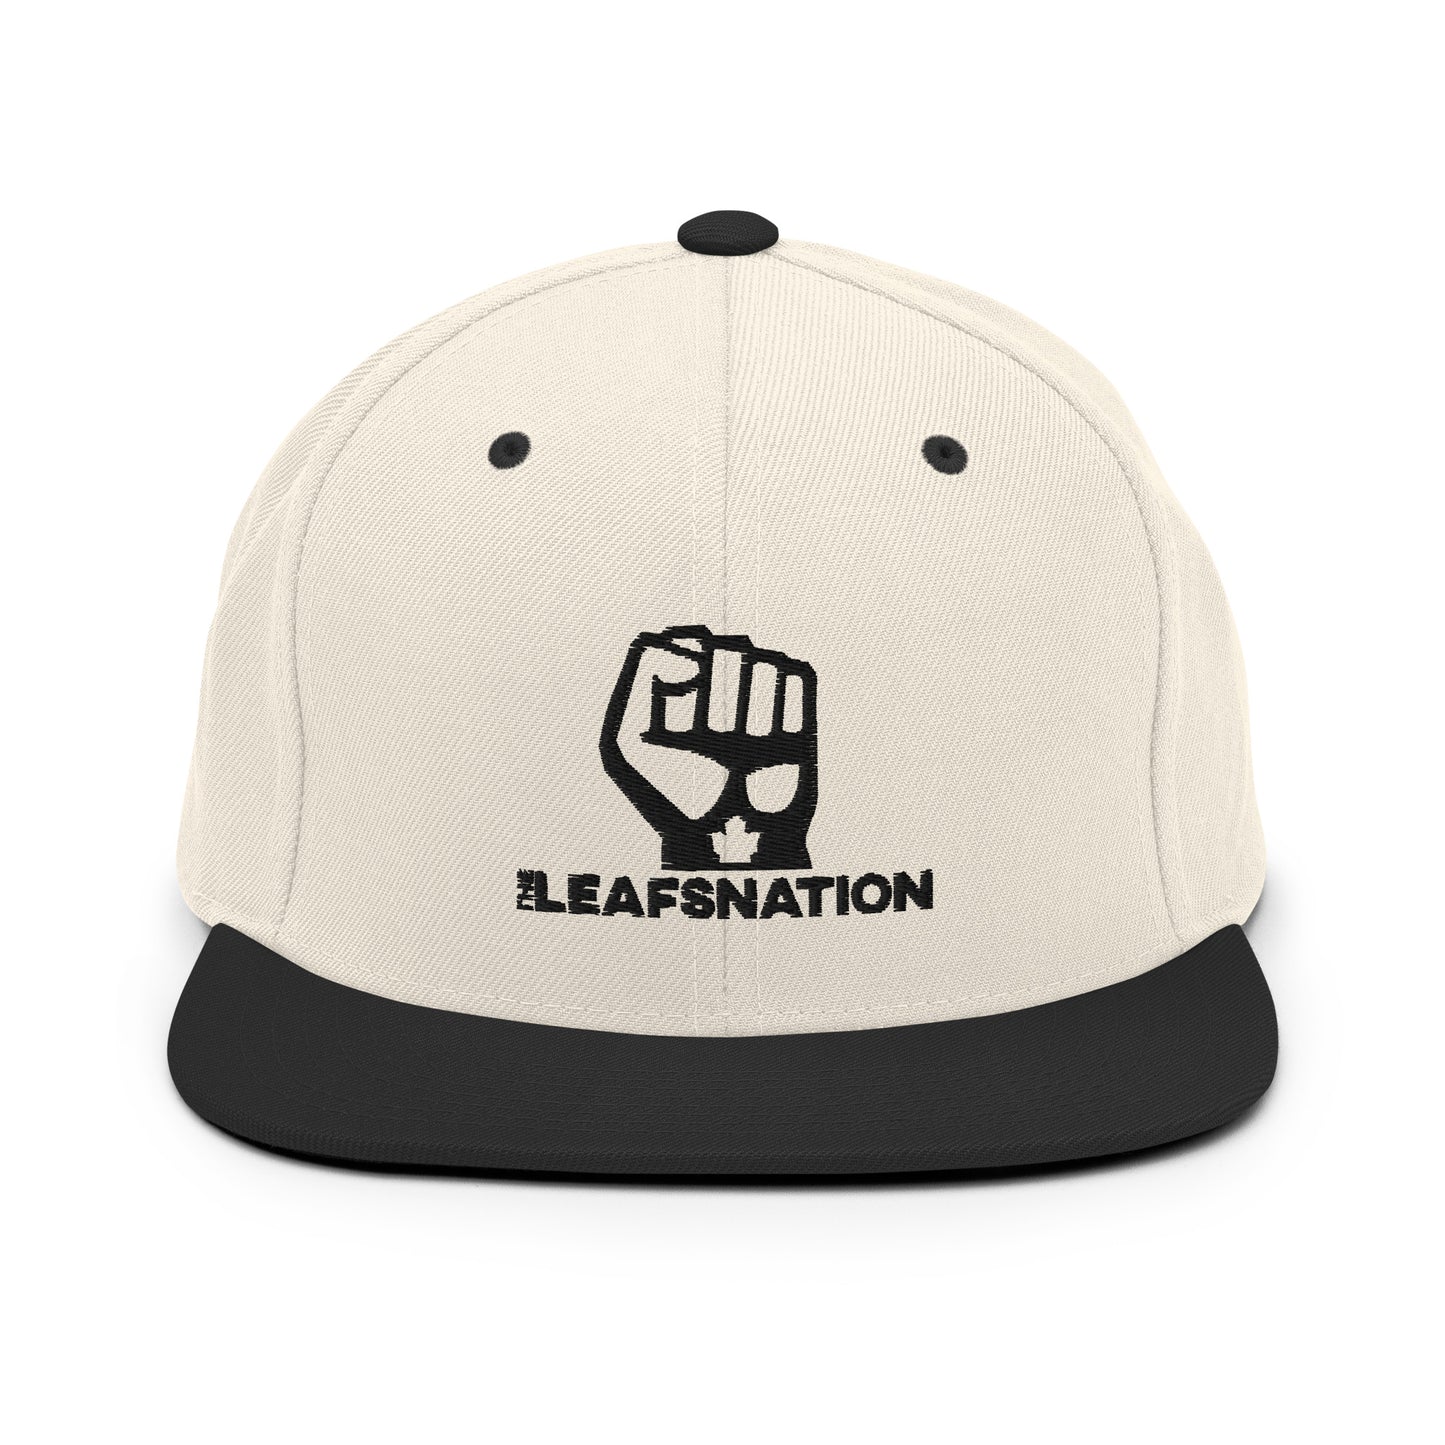 THE CLASSICS - Leafsnation Snapback Hat